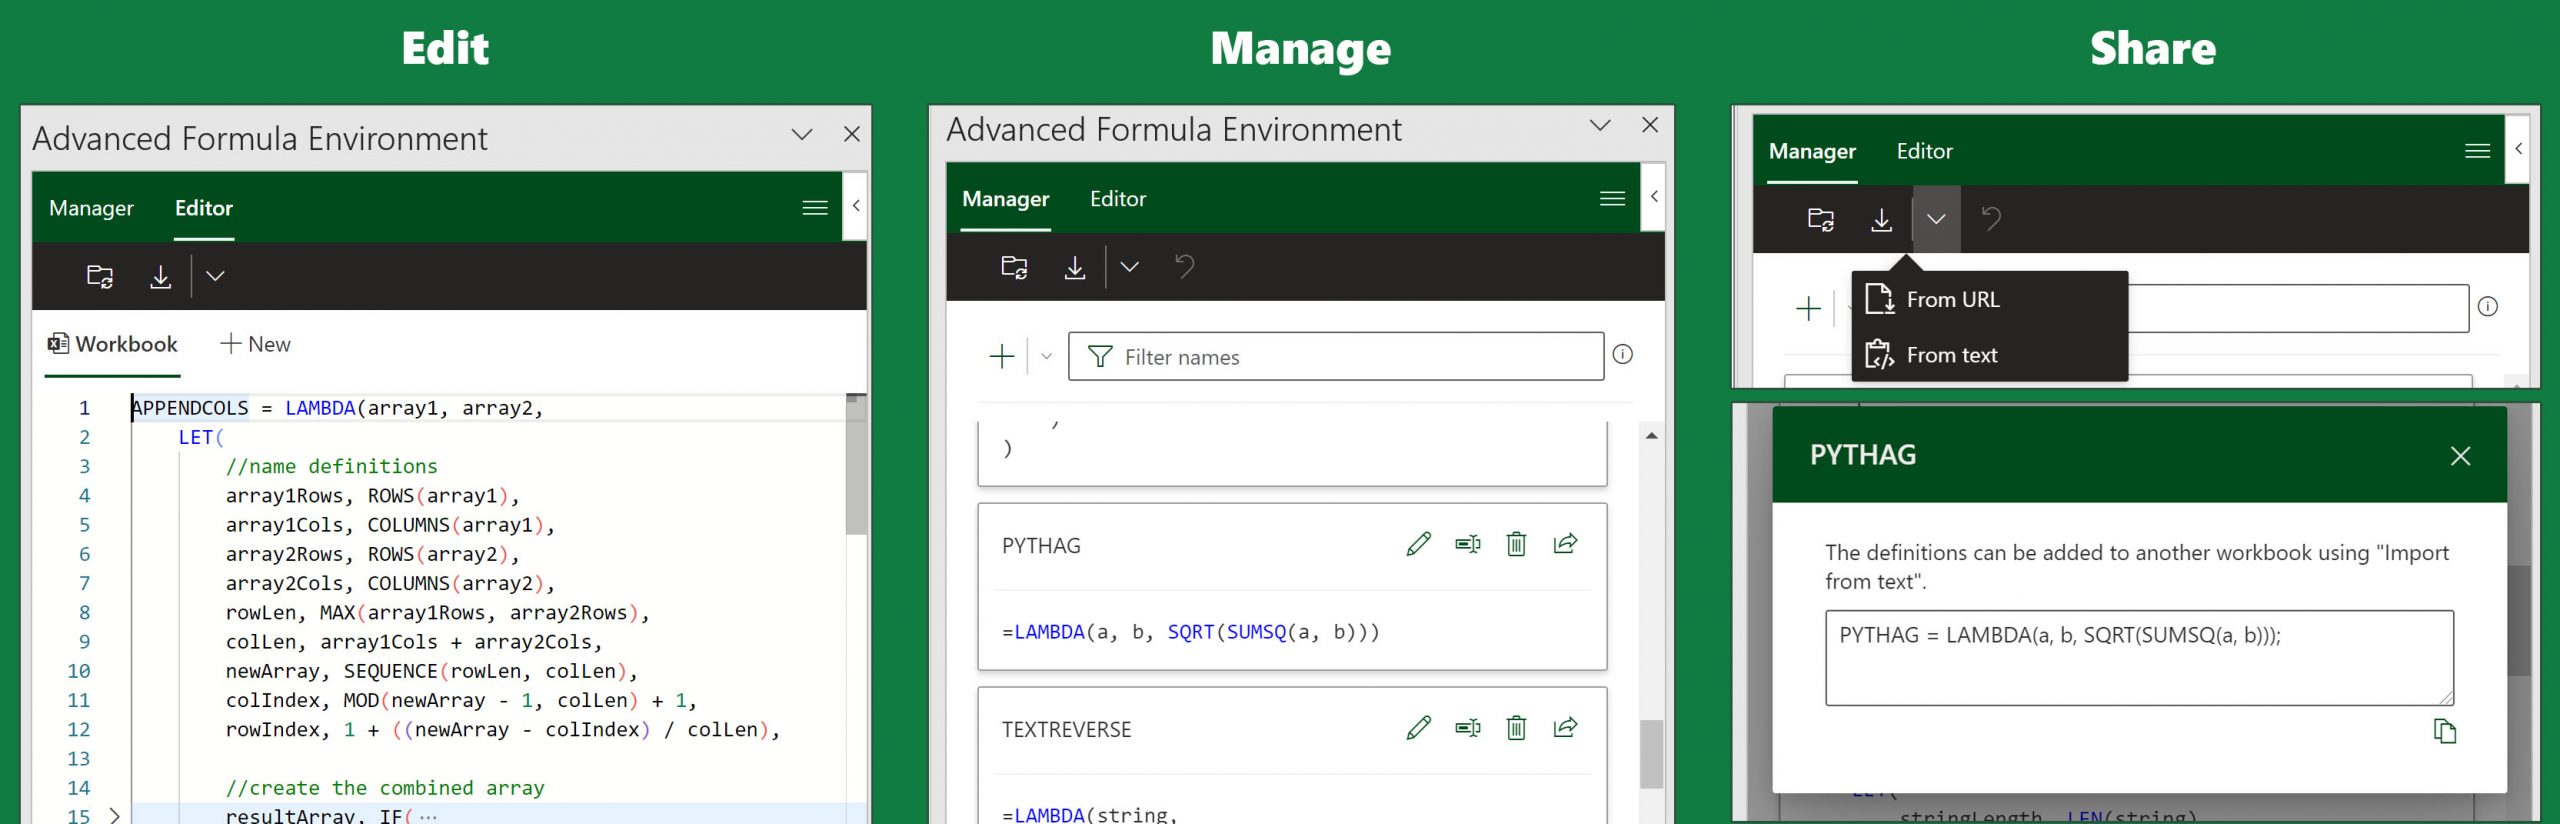 Screenshot advanced formula environment panes scaled